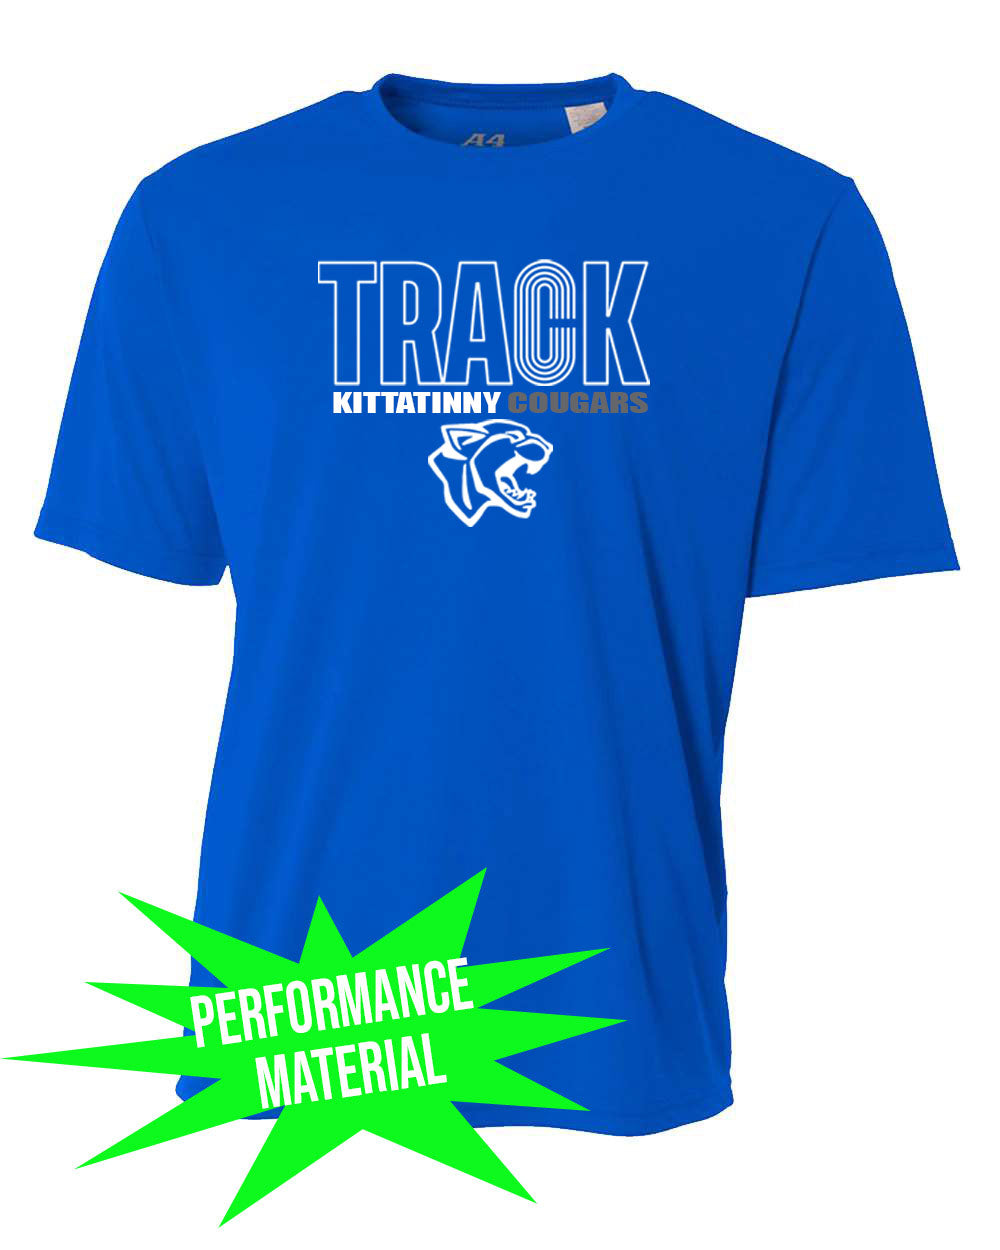 Kittatinny Track Performance Material design 1 T-Shirt